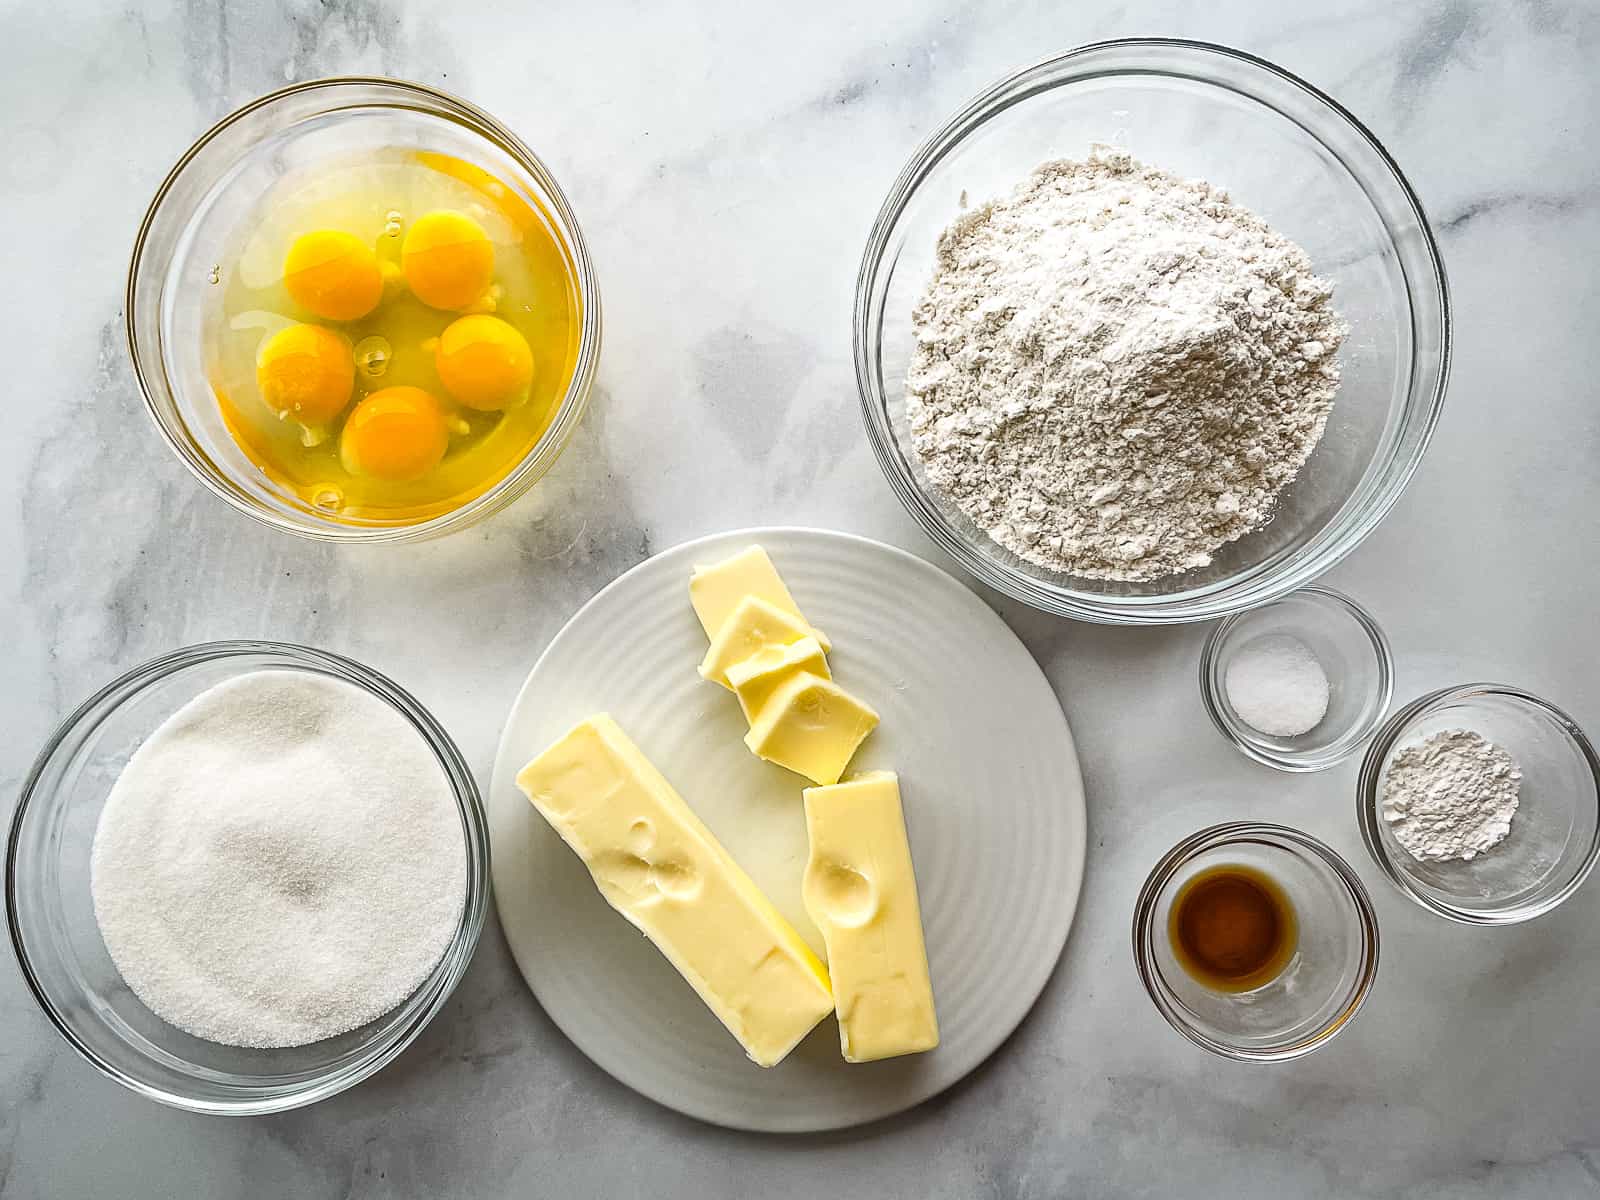 Ingredients for gluten-free pound cake.